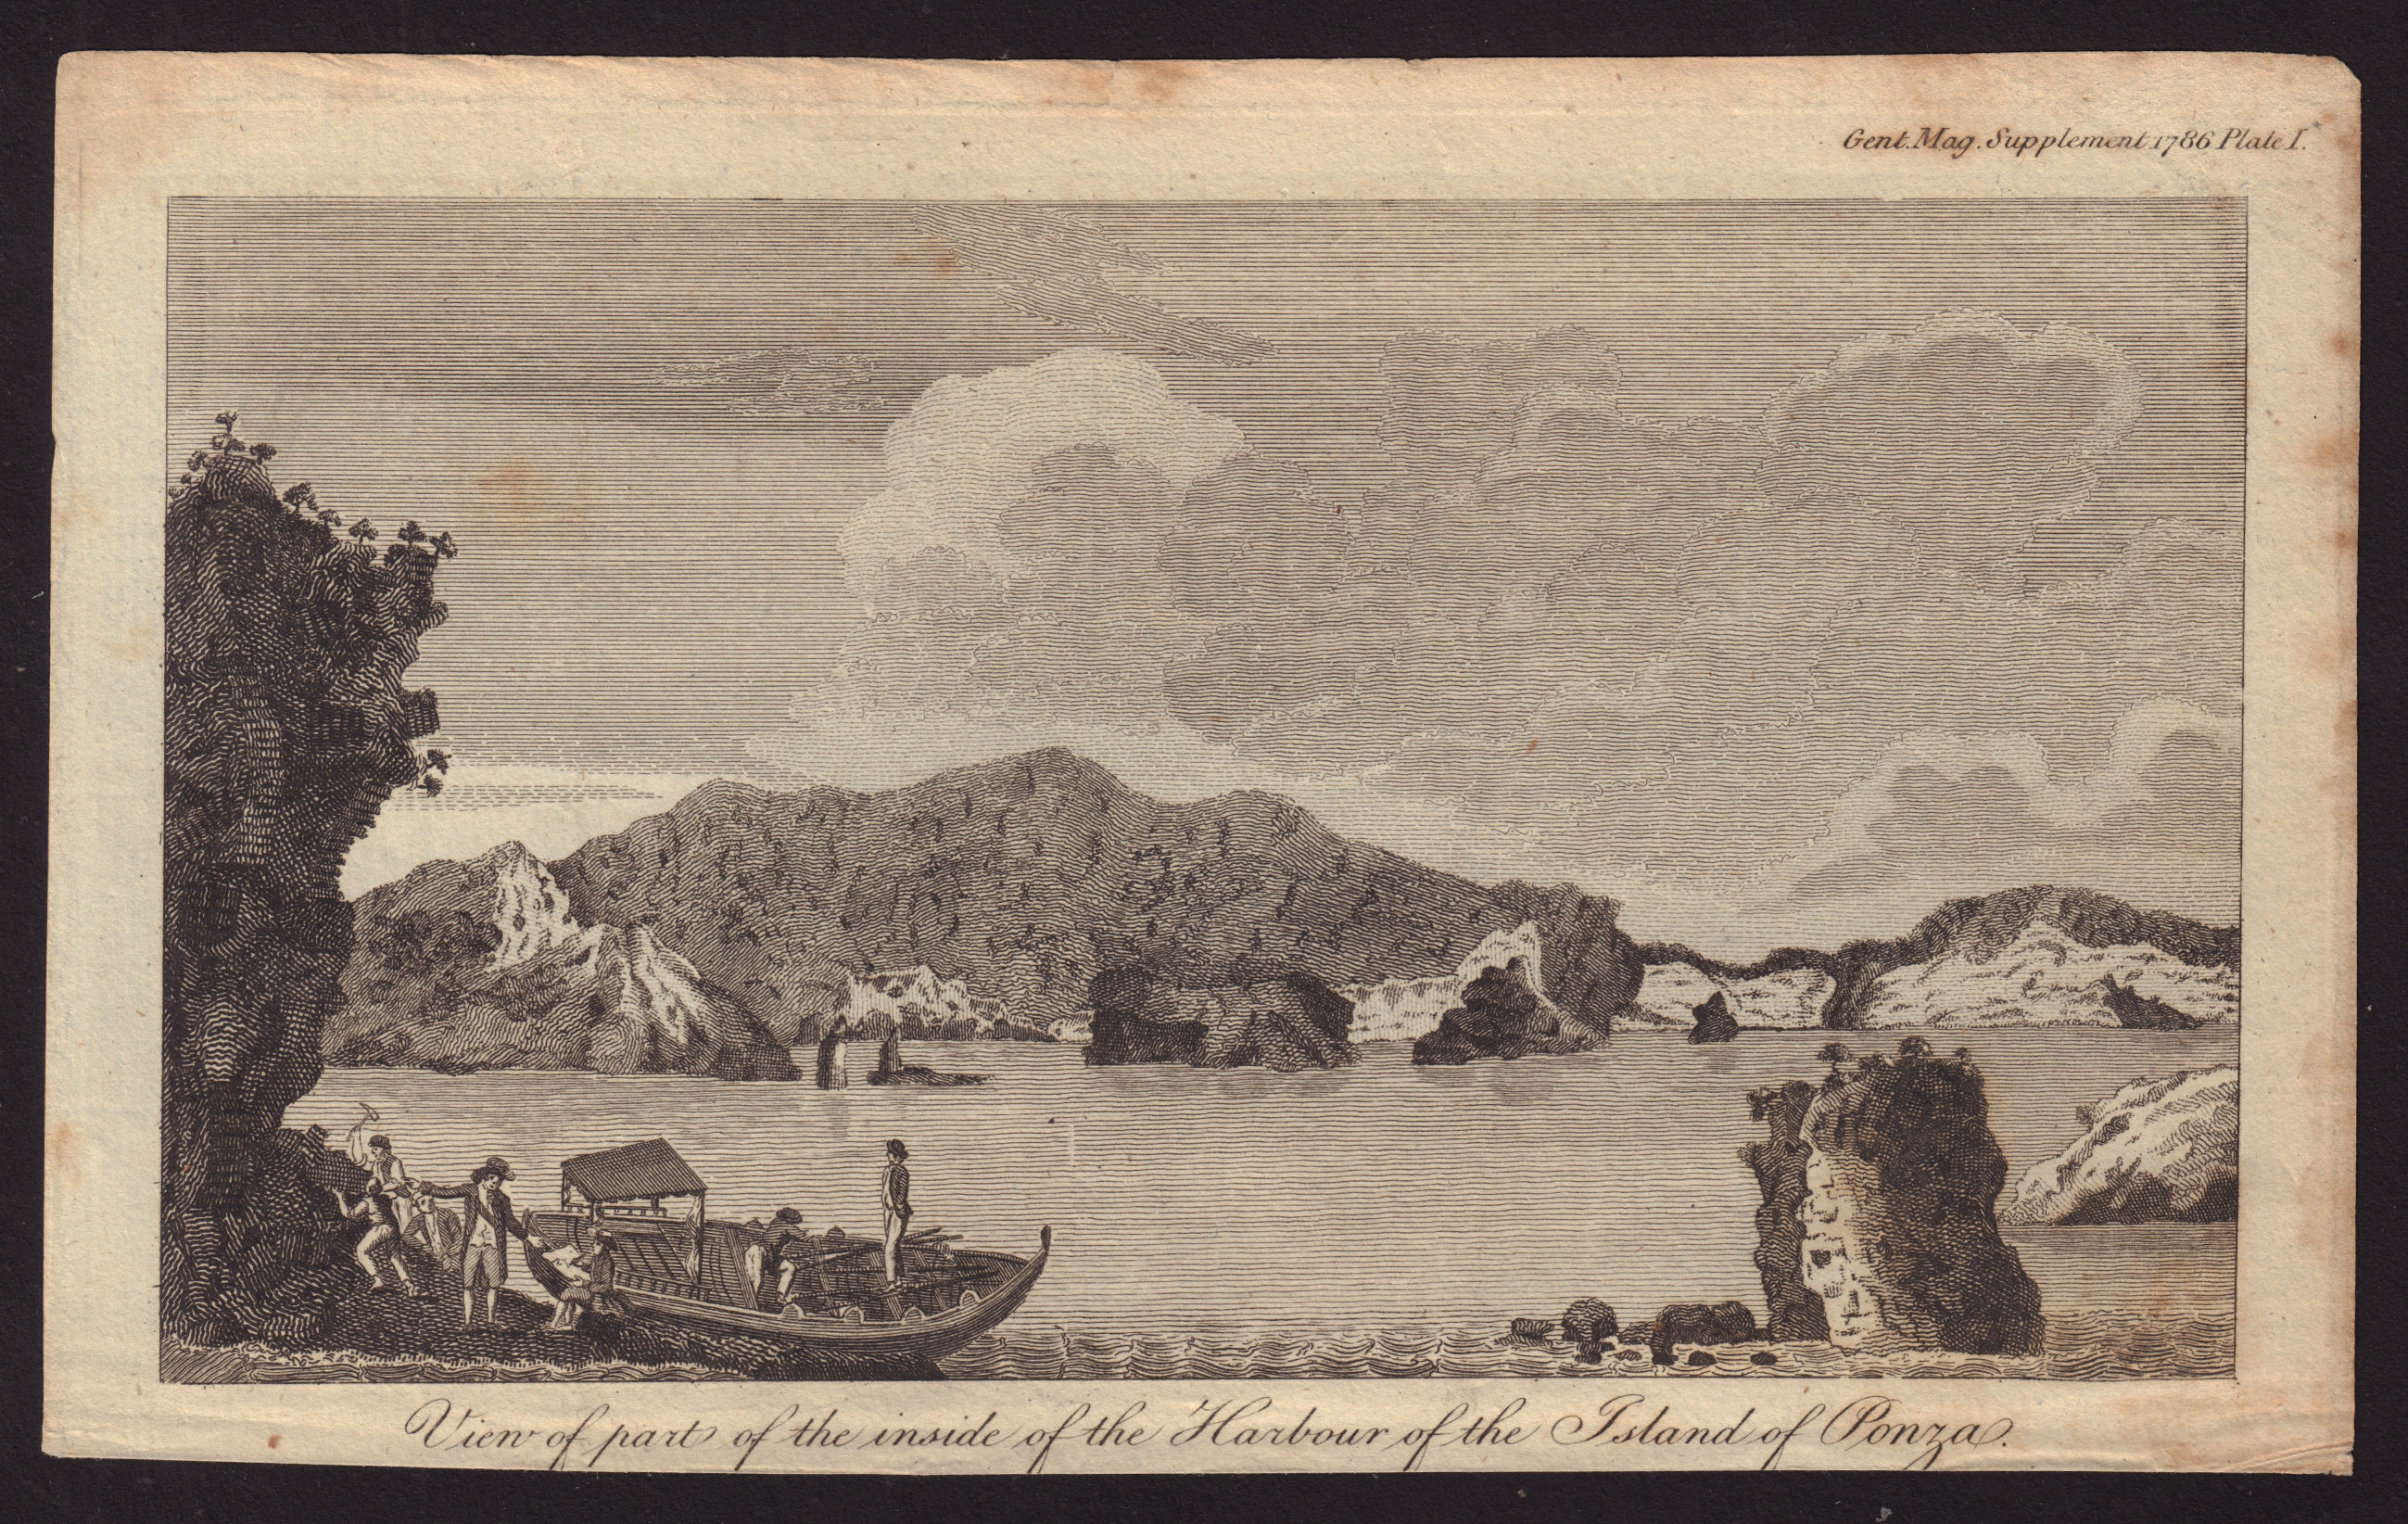 The Harbour of the Island of Ponza, Tyrrhenian Sea. Pontine Islands, Italy 1786